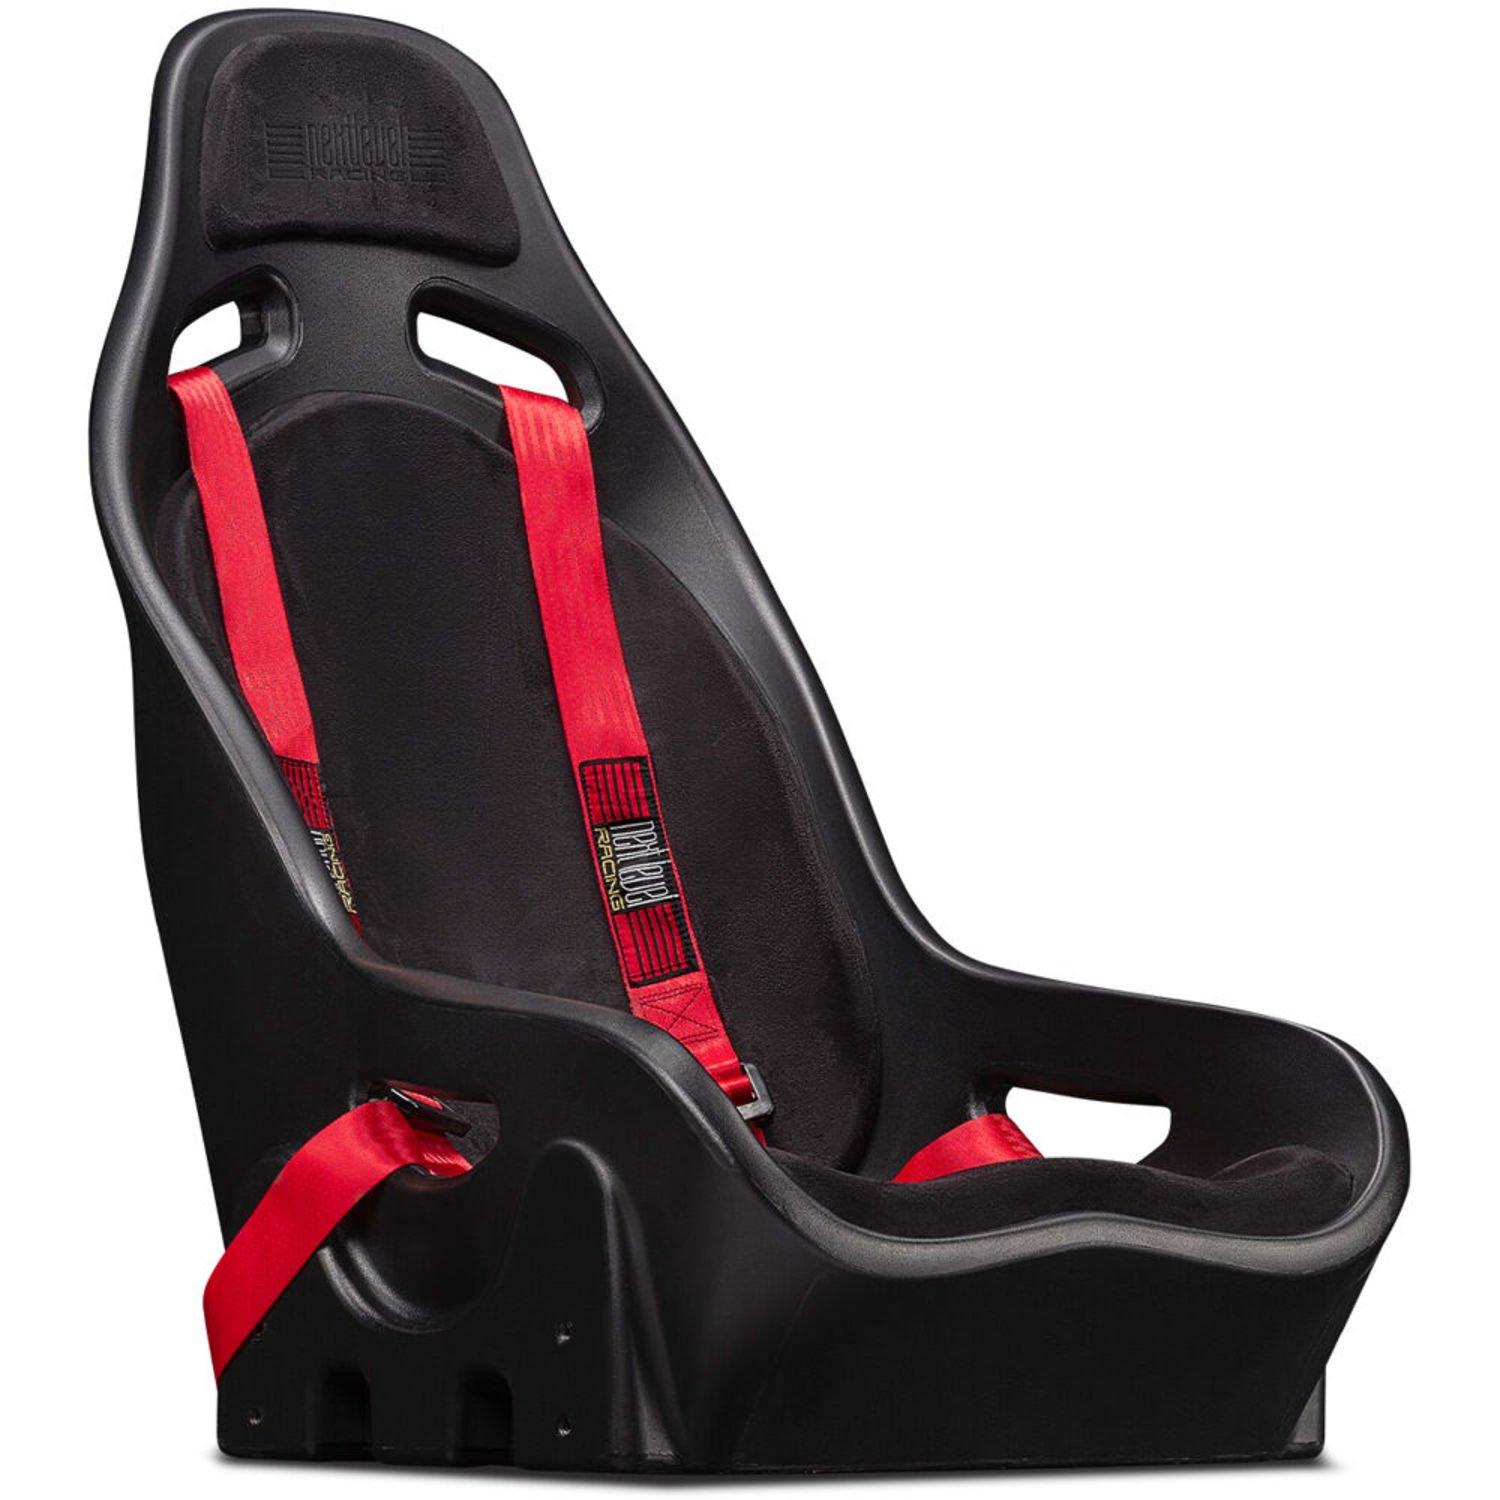 list item 1 of 5 Next Level Racing Elite ES1 Sim Racing Seat